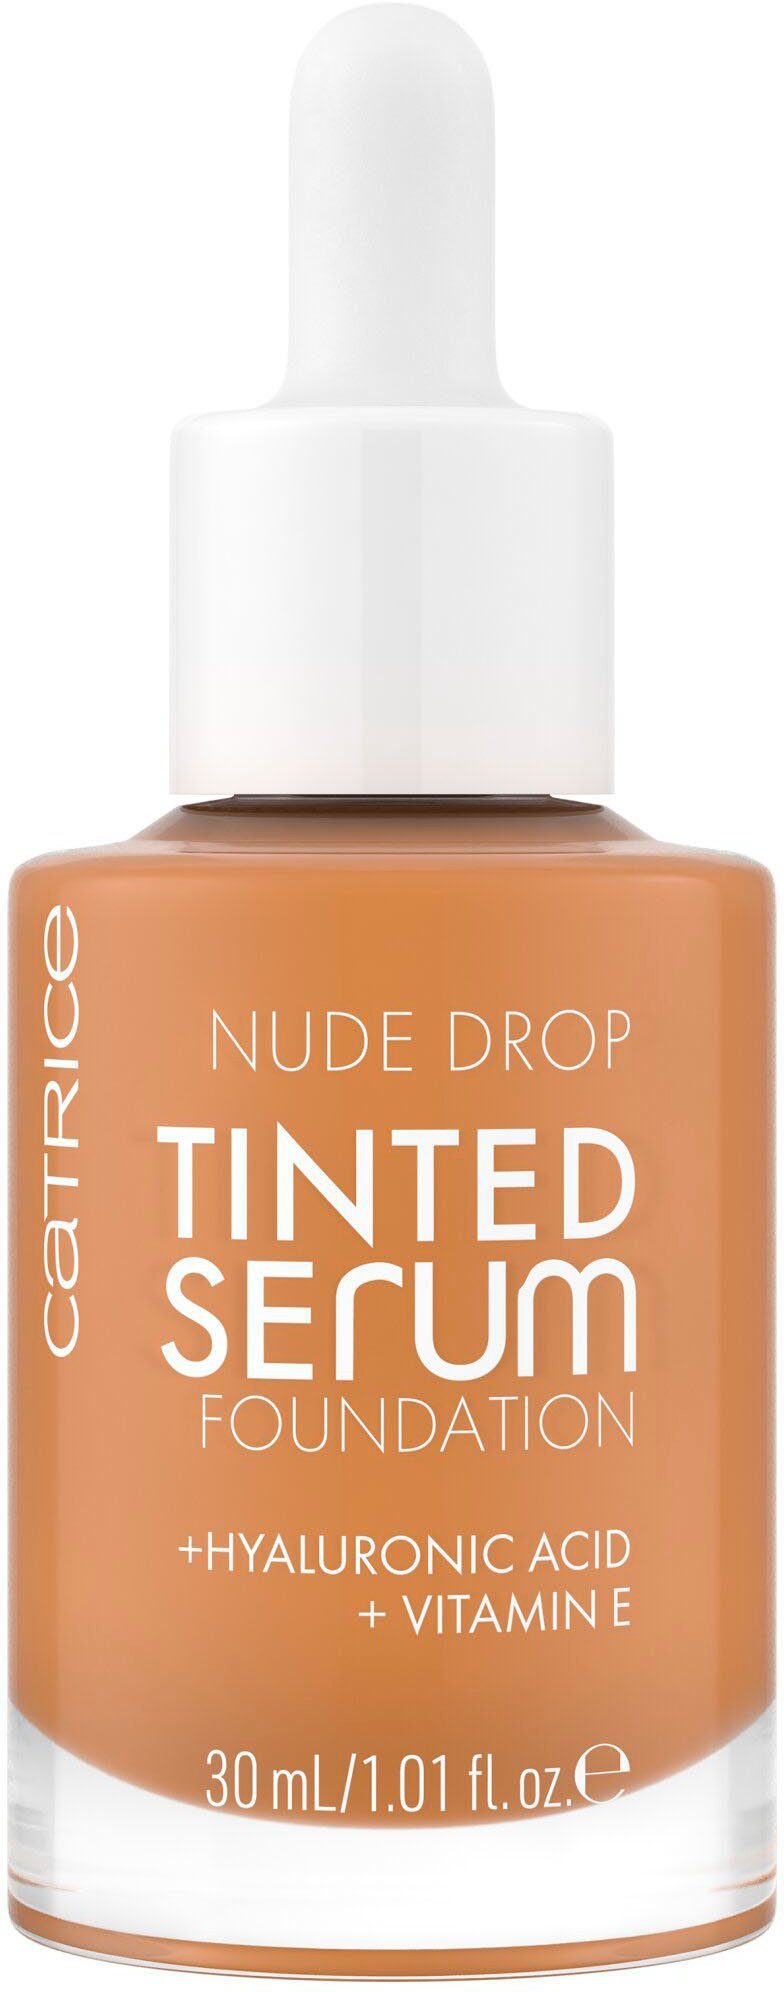 Catrice Foundation Nude Drop Tinted Serum Foundation